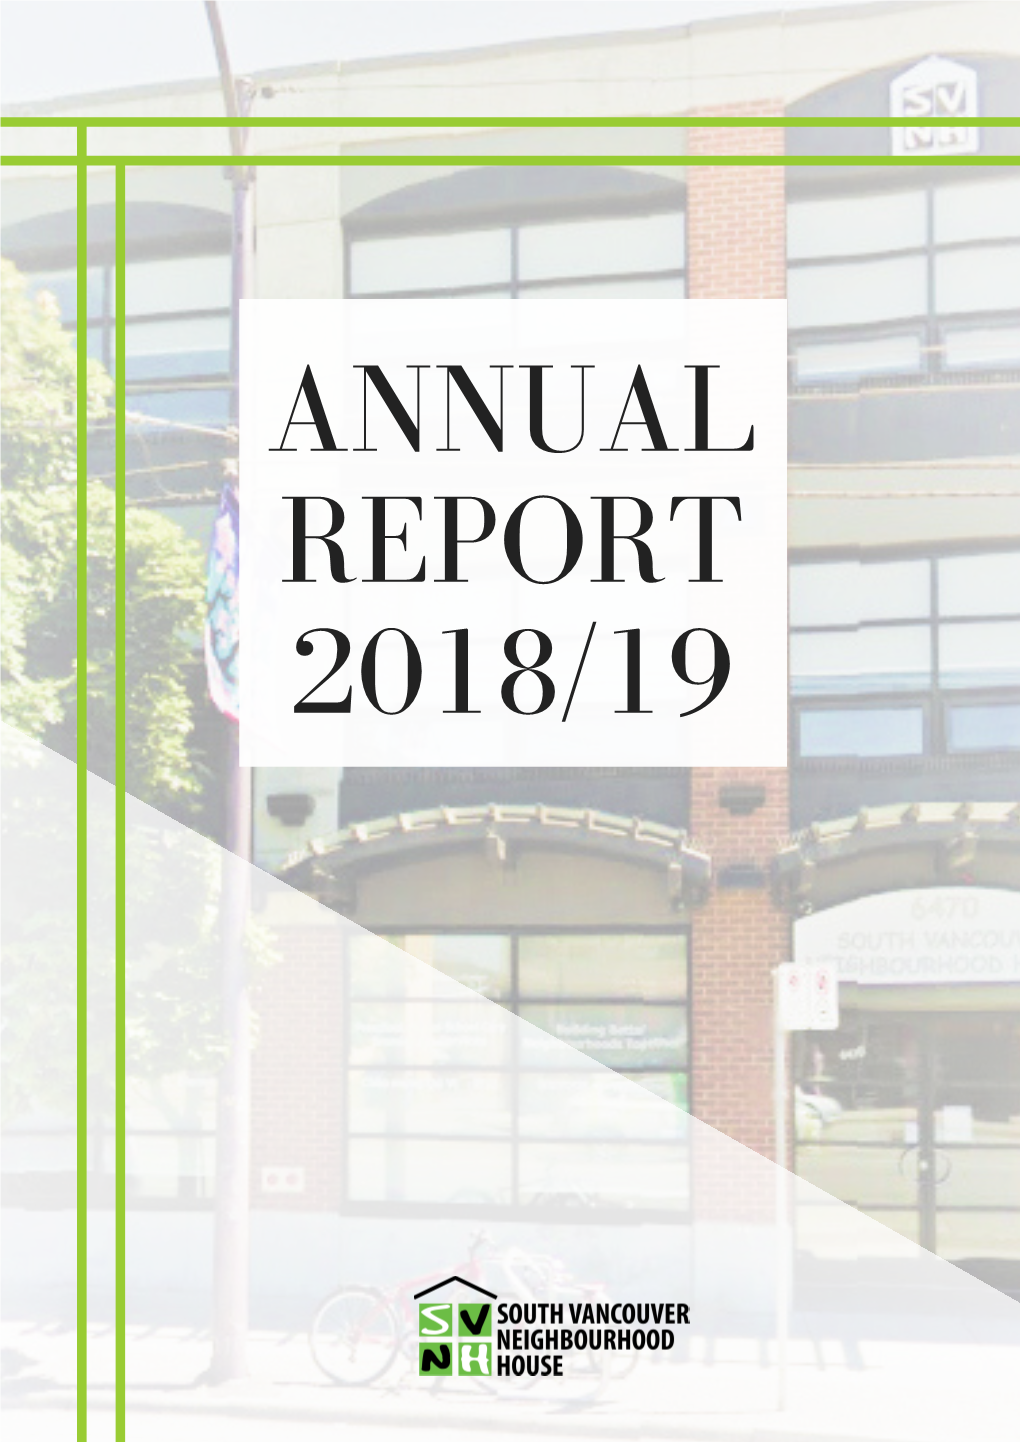 2018/19 Annual Report